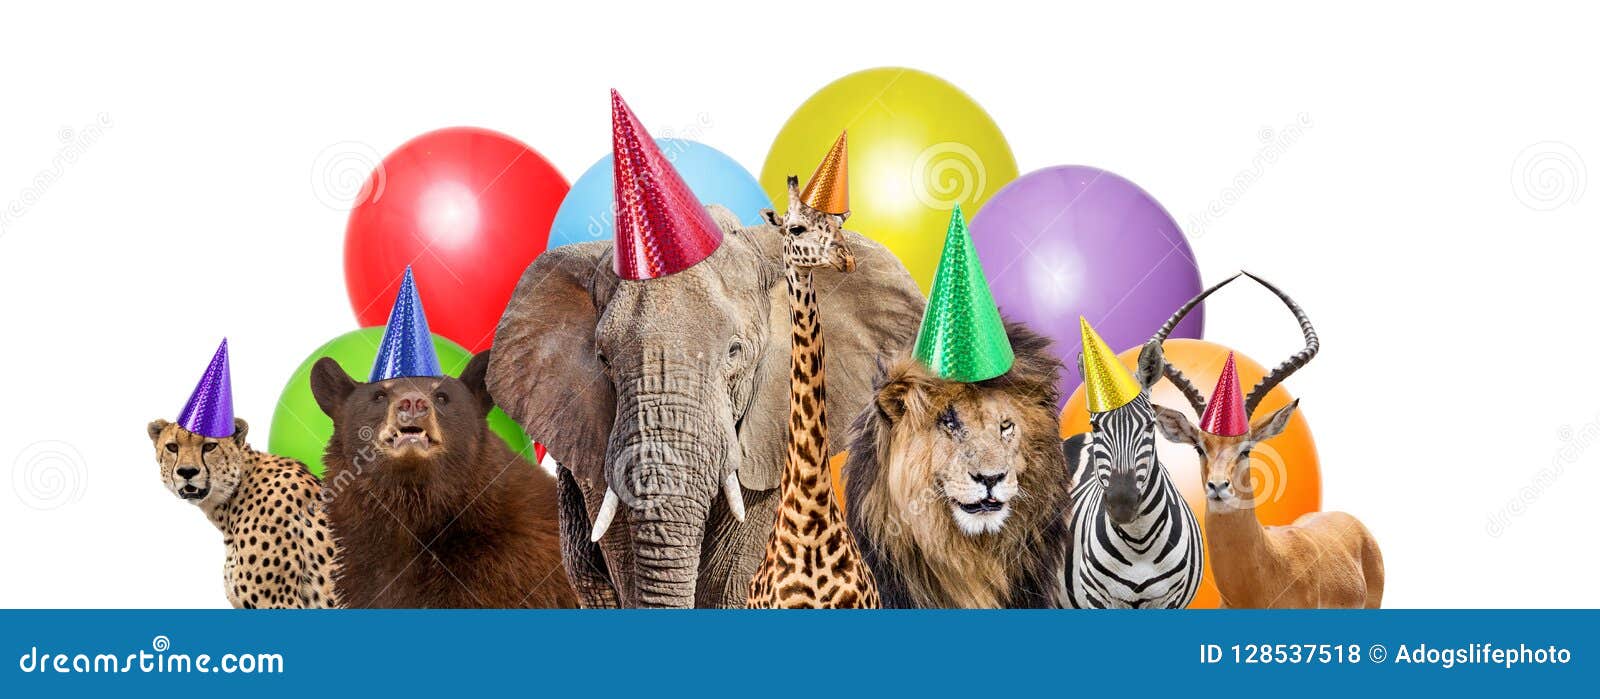 wild animal birthday party web banner